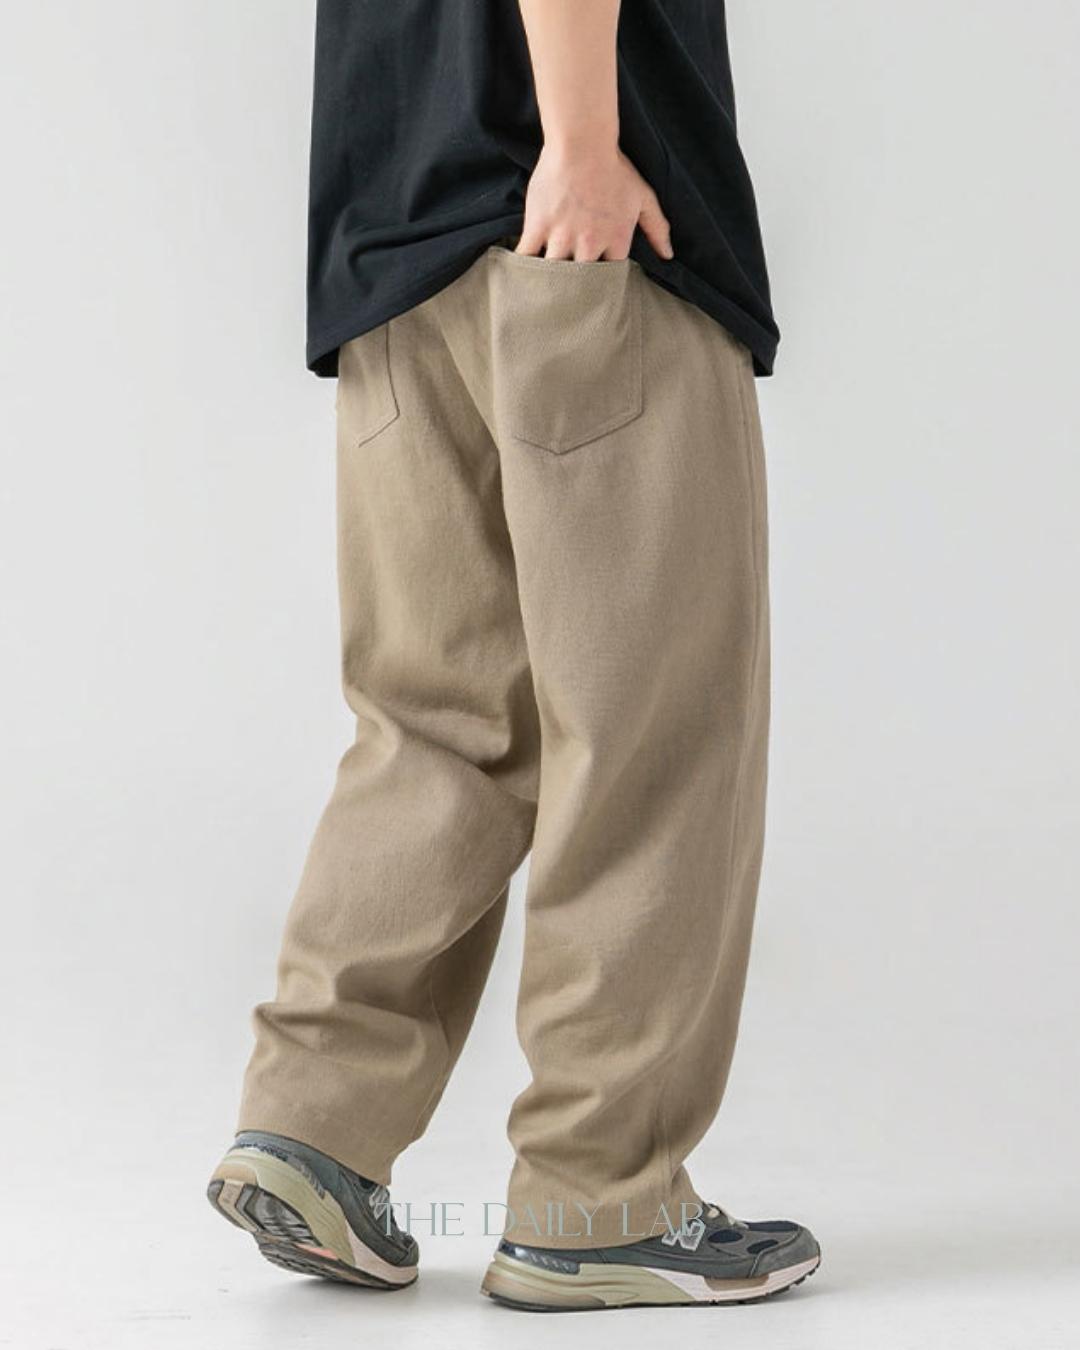 Vintage Cotton Straight Long Pants in Khaki (Size M)